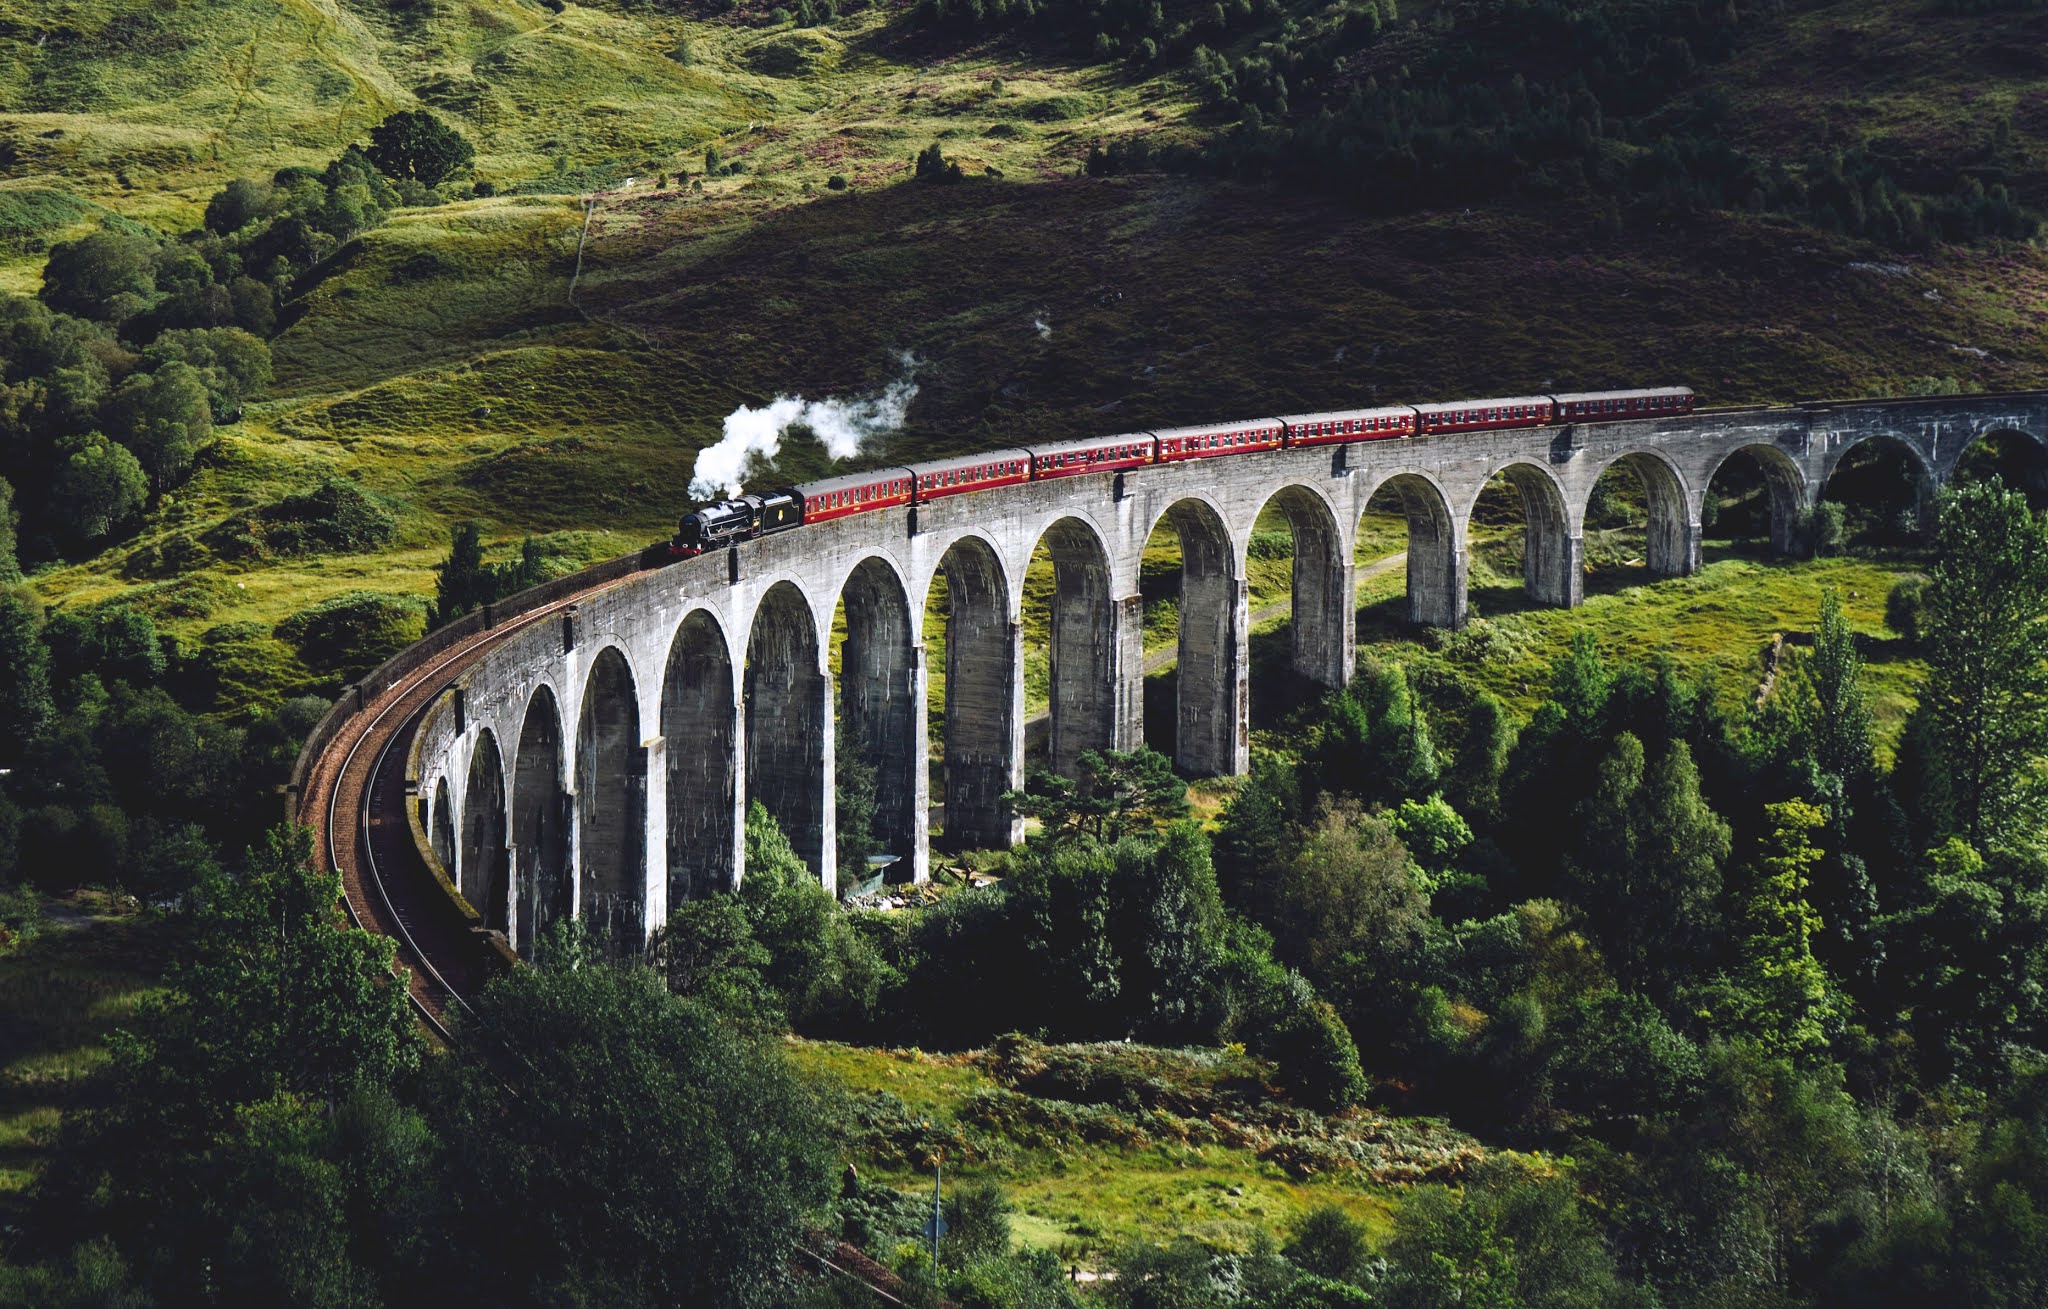 A steam engine train travelling across the Glen Finnan Viaduct in Scotland